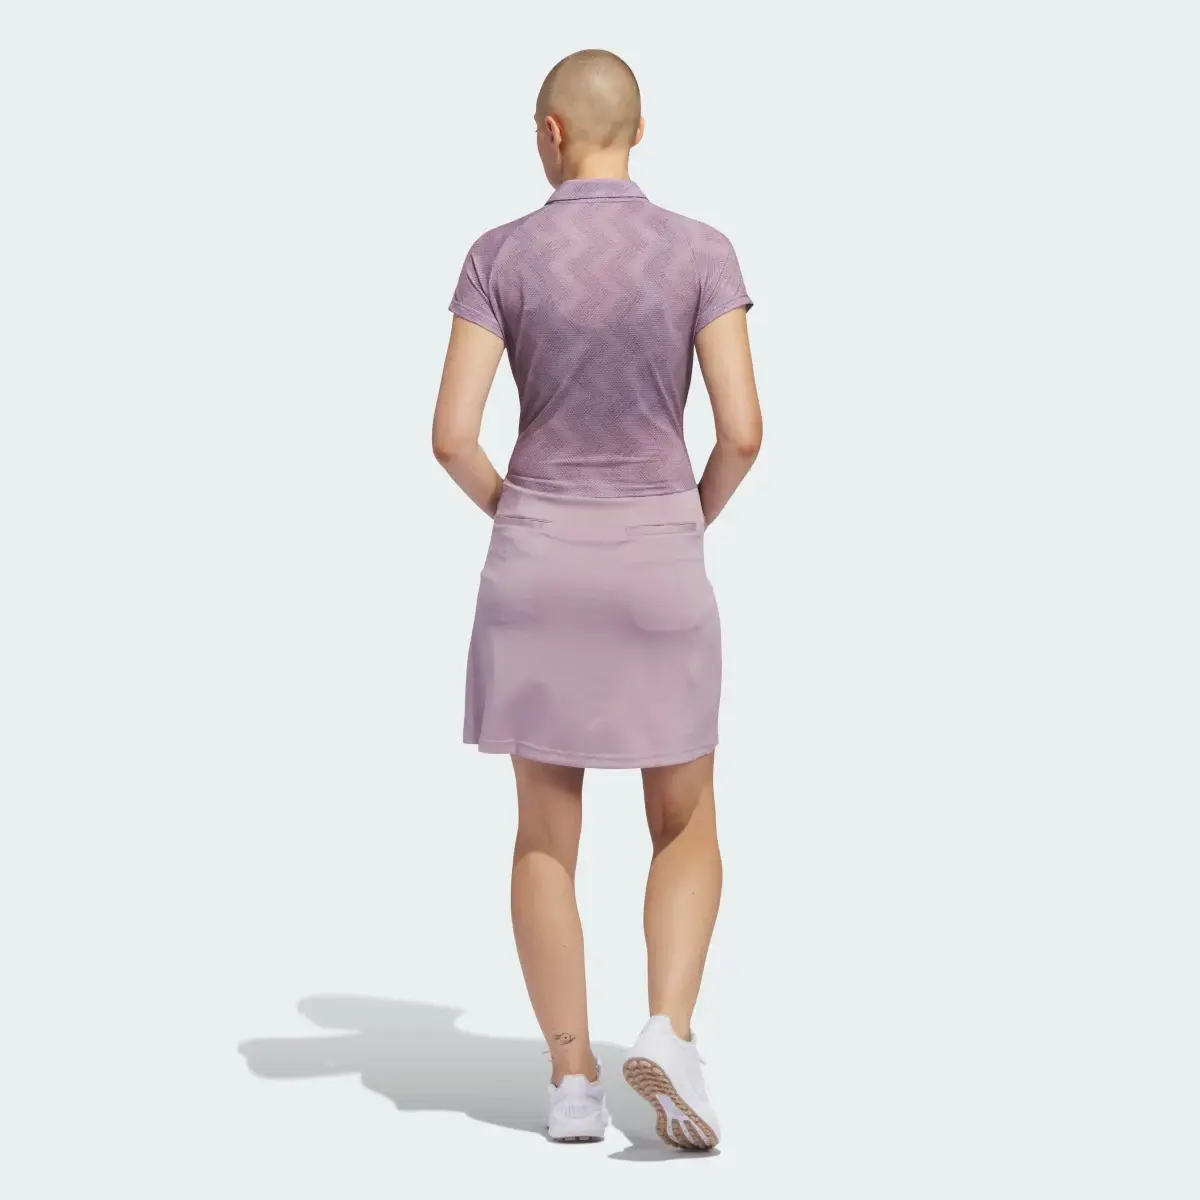 Adidas Women's Ultimate365 Short Sleeve Dress. 3